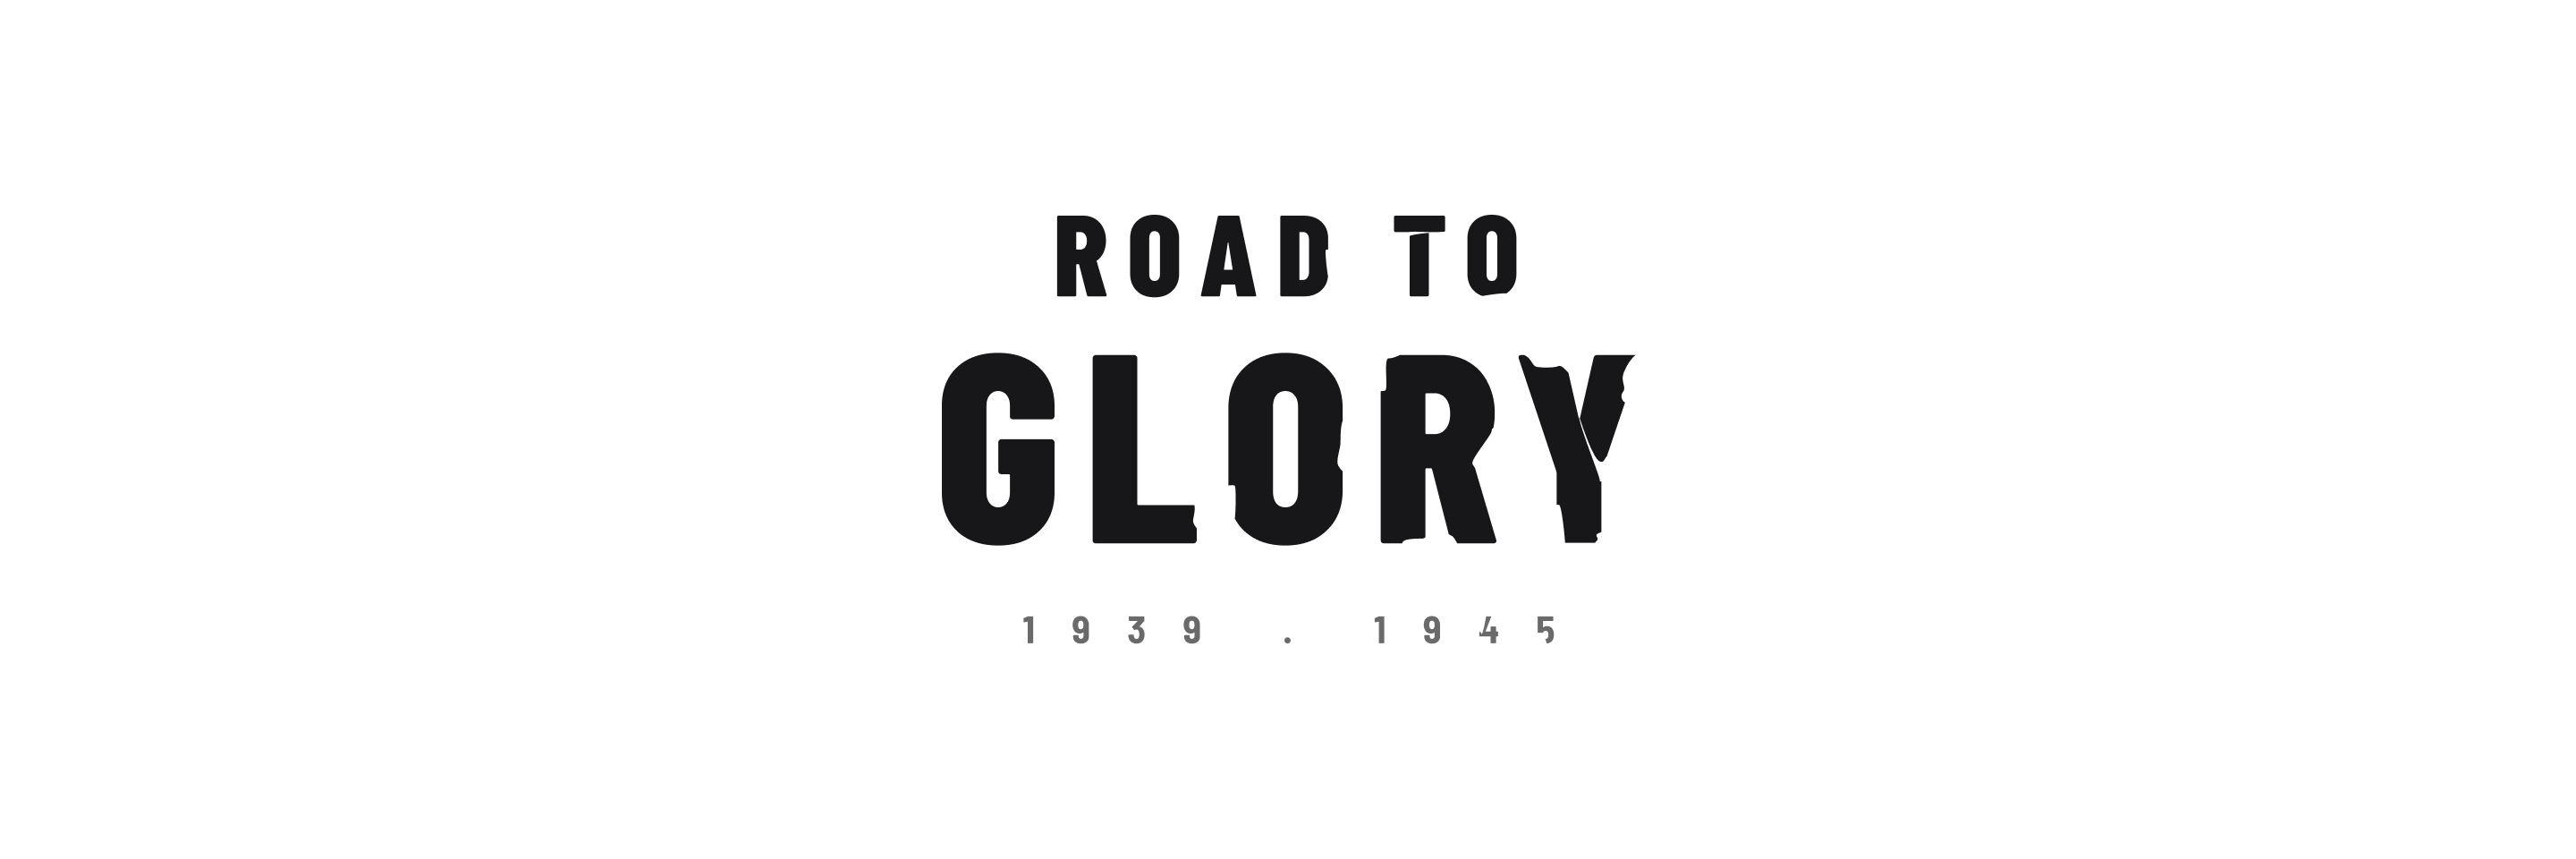 Road to Glory 1939 - 1945